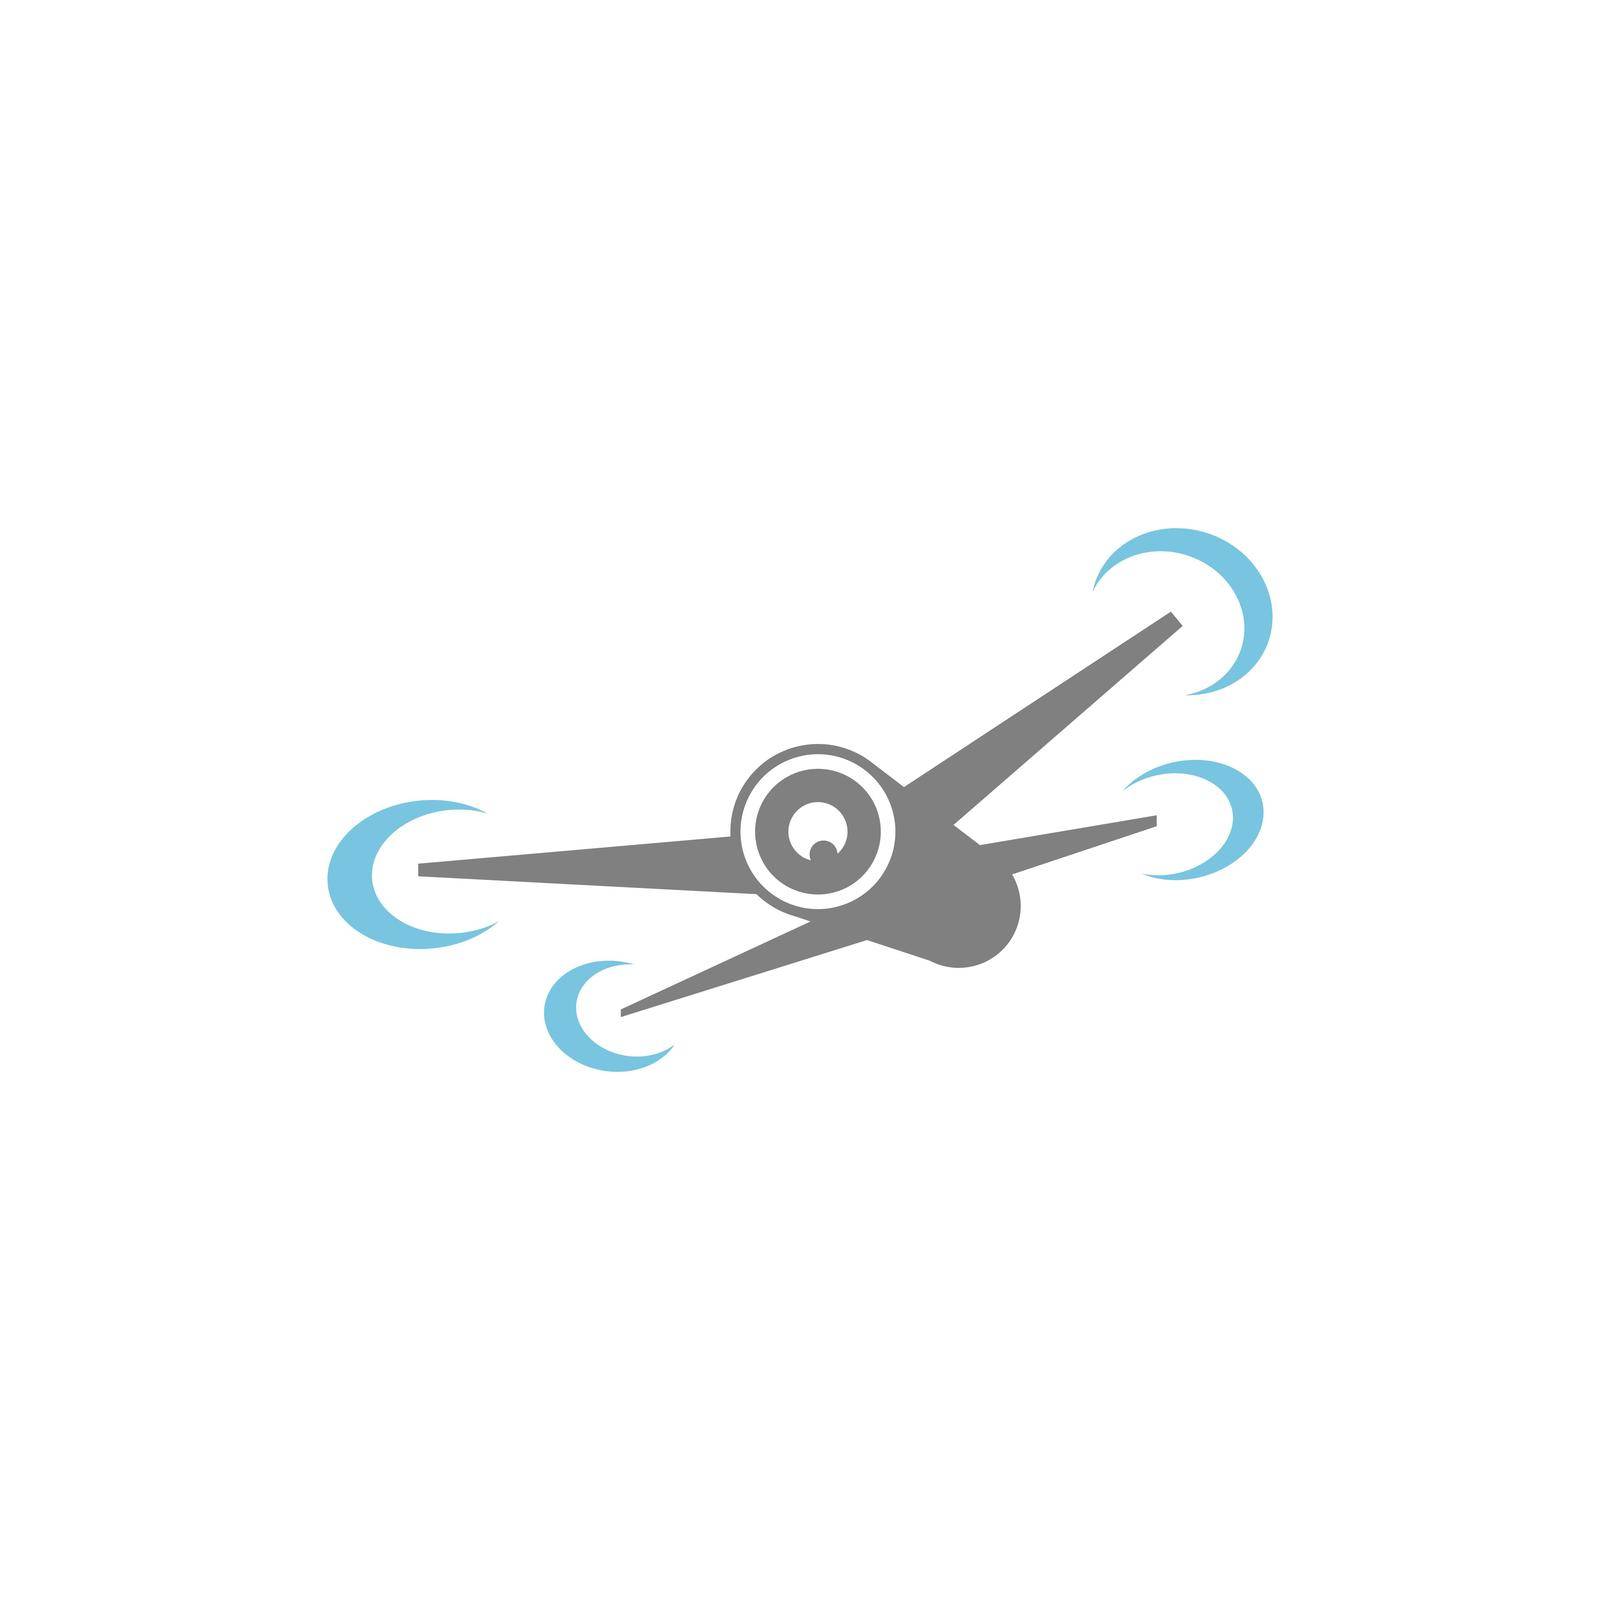 Drone icon logo design illustration vector by bellaxbudhong3